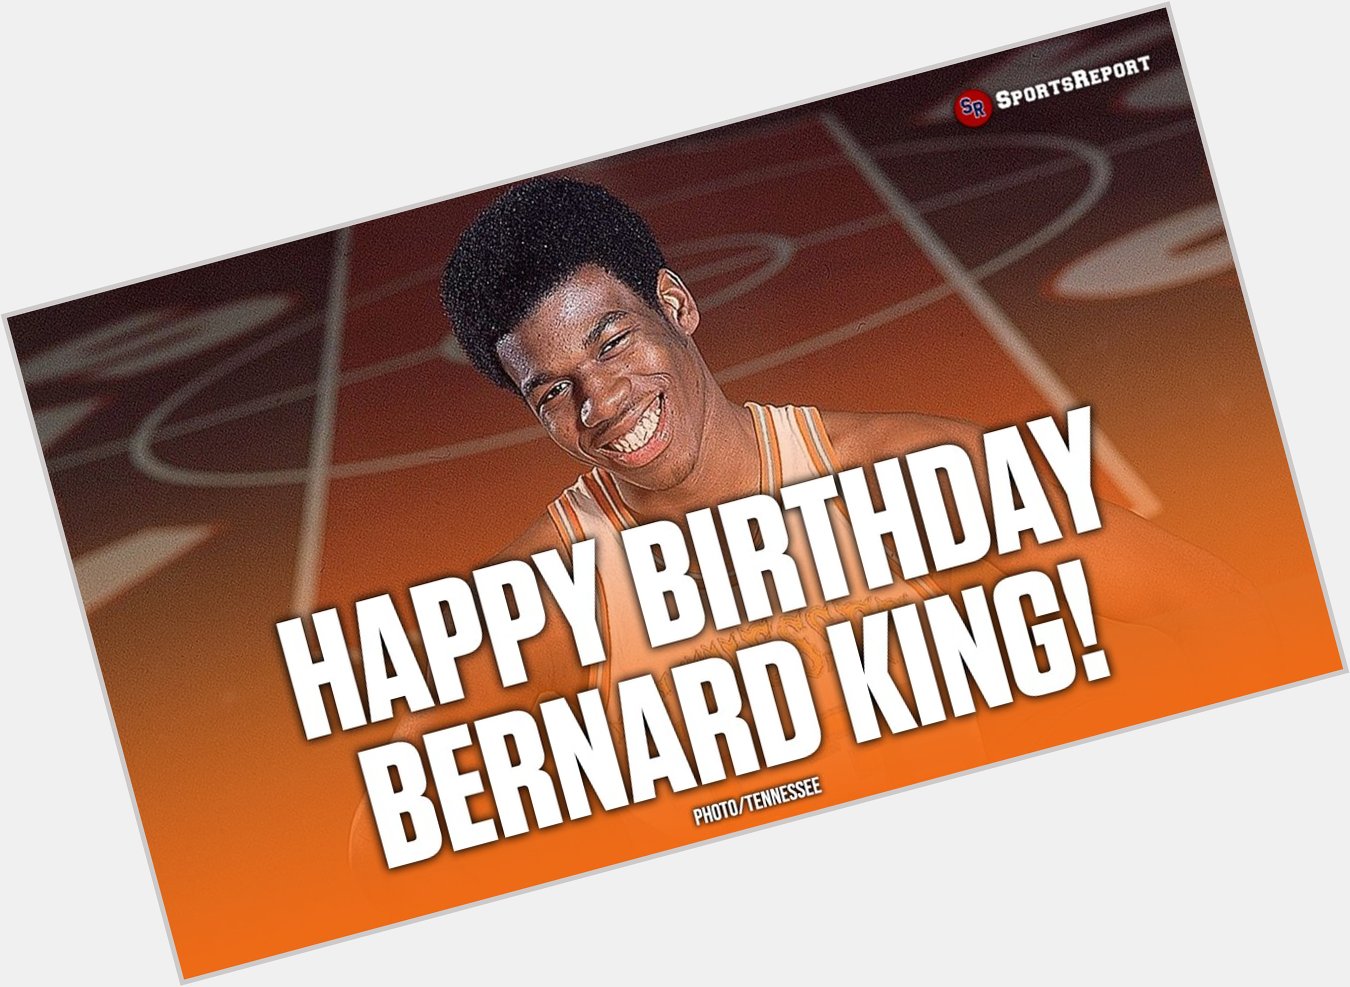  Fans, let\s wish legend Bernard King a Happy Birthday! GO 